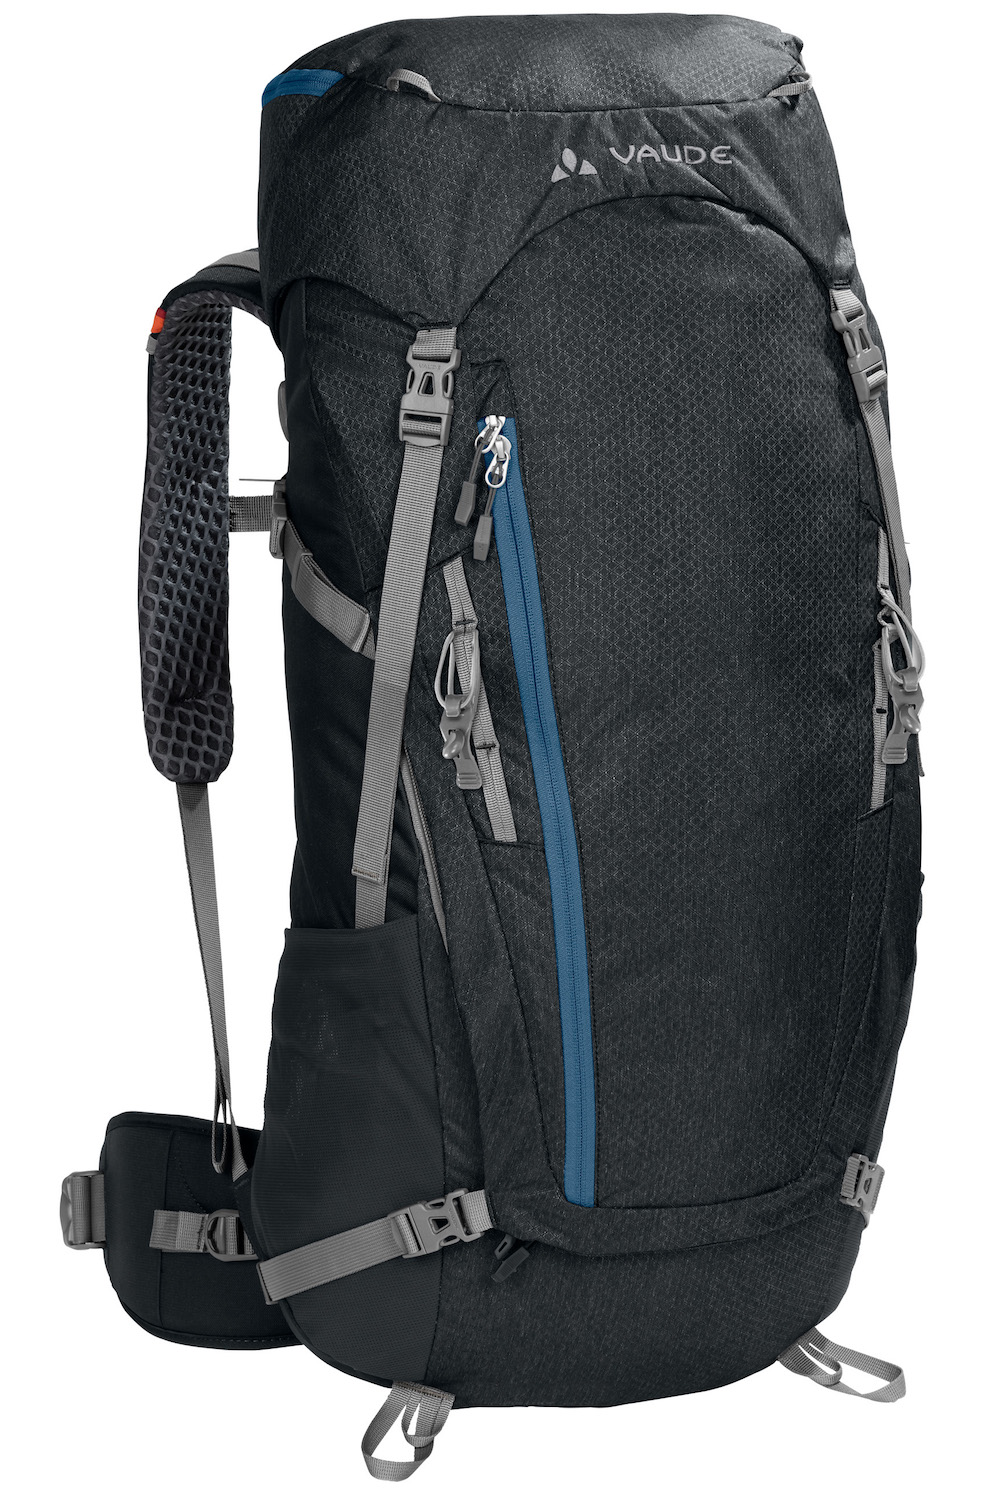 Vaude - Asymmetric 42 + 8 - Backpack